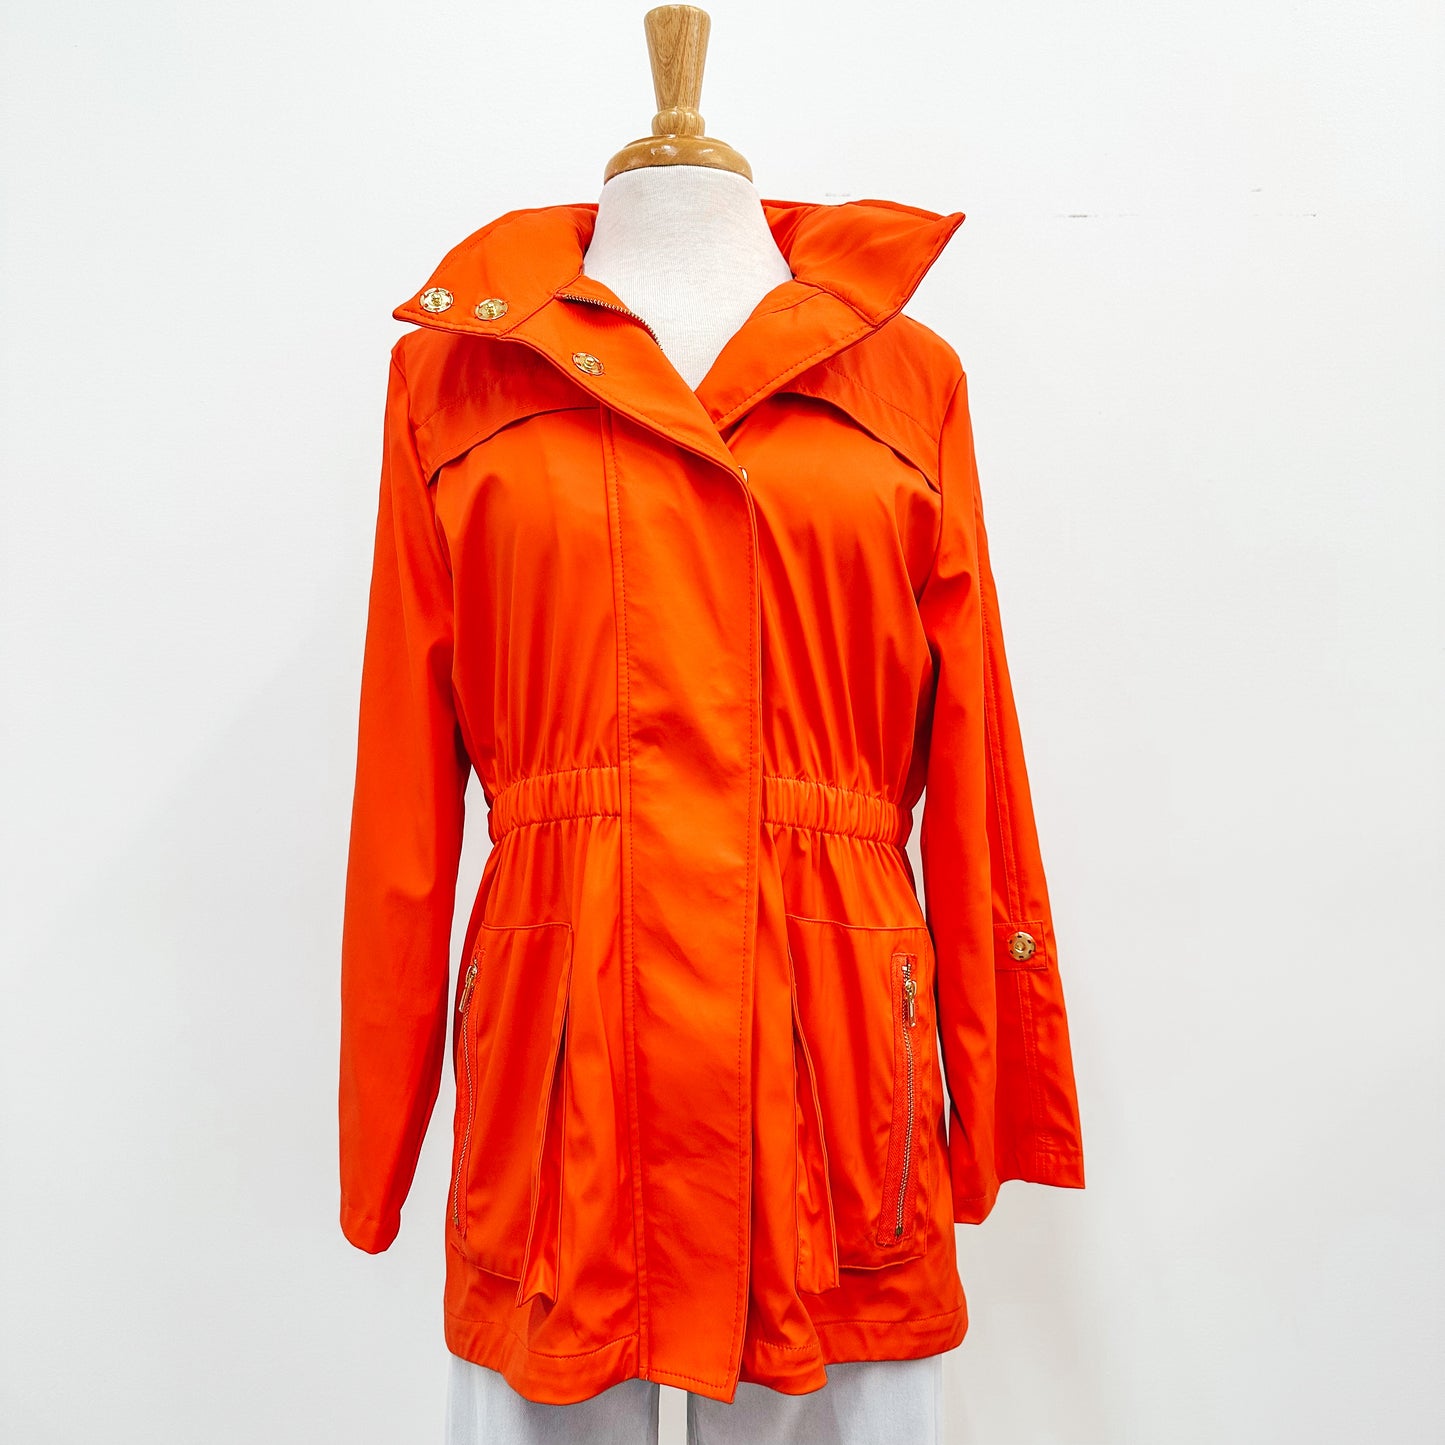 Ciao Milano Waterproof Rain Jacket - Orange